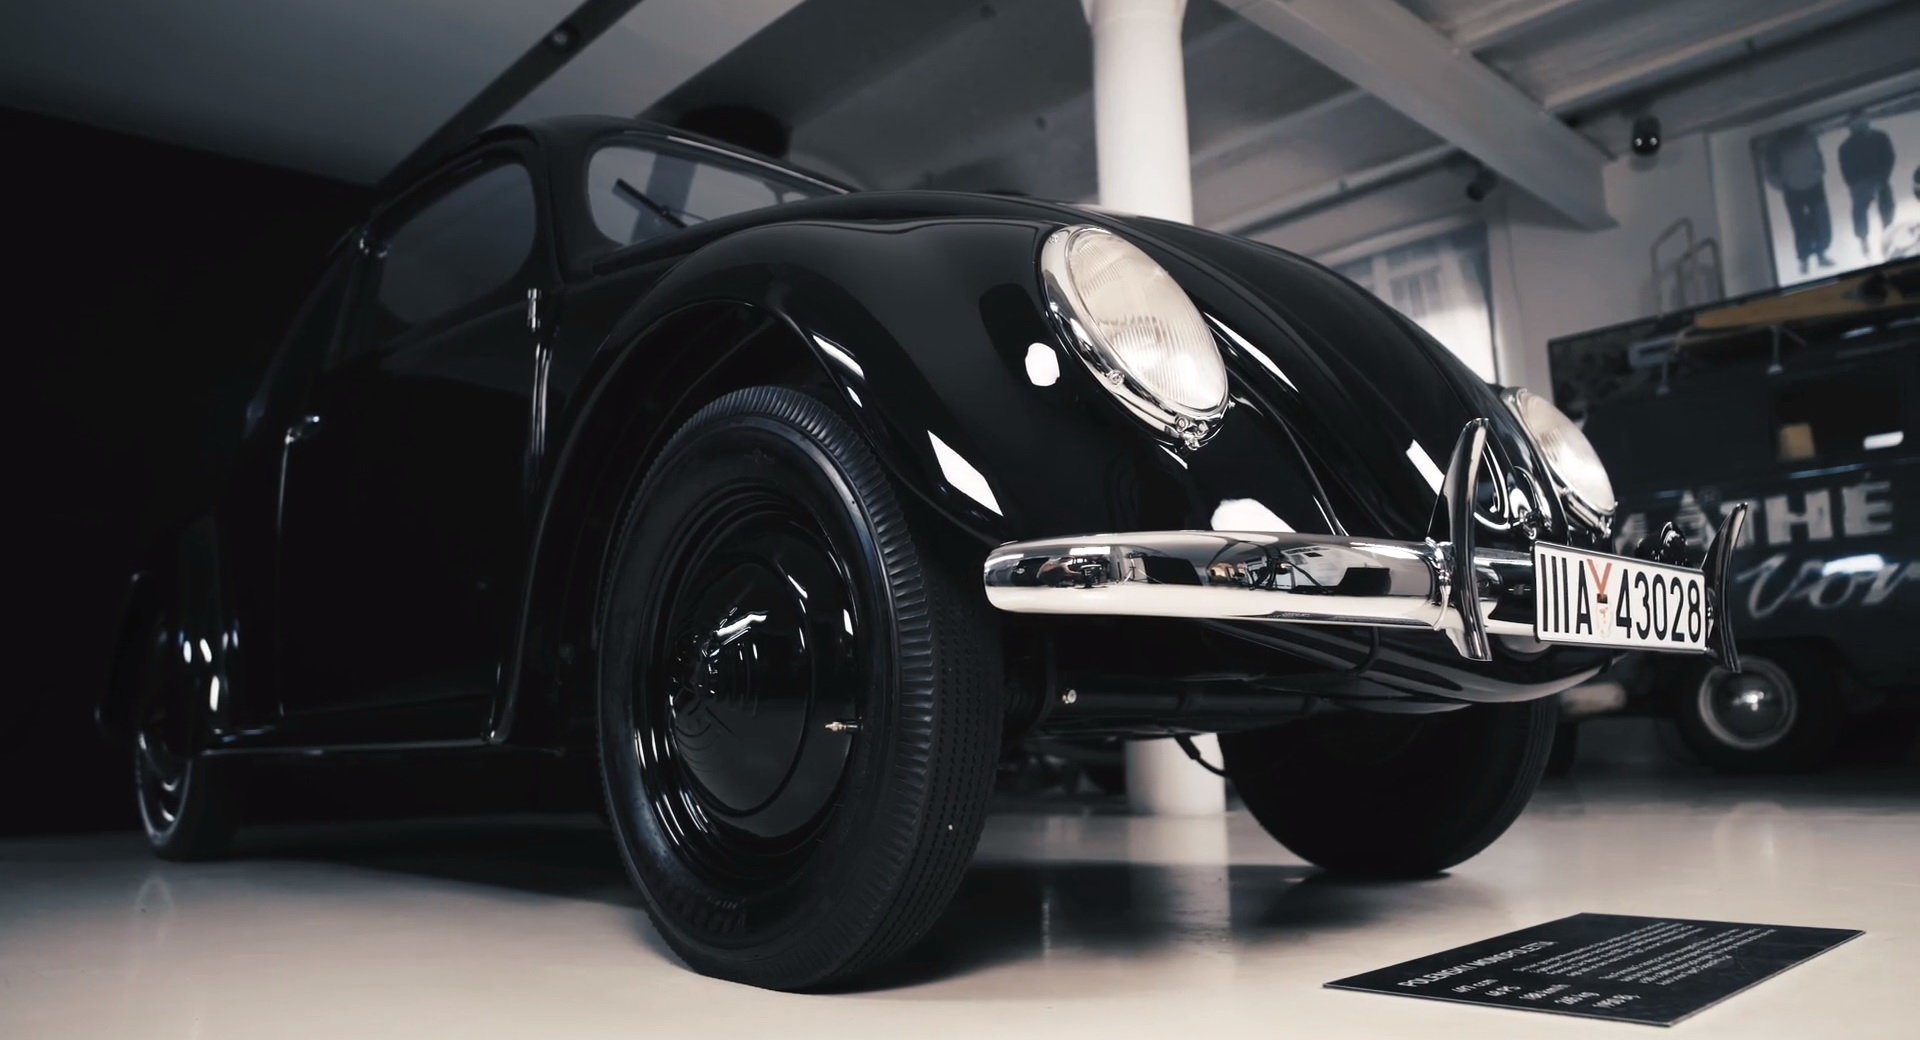 A Porsche-Powered Baja Bug Beetle